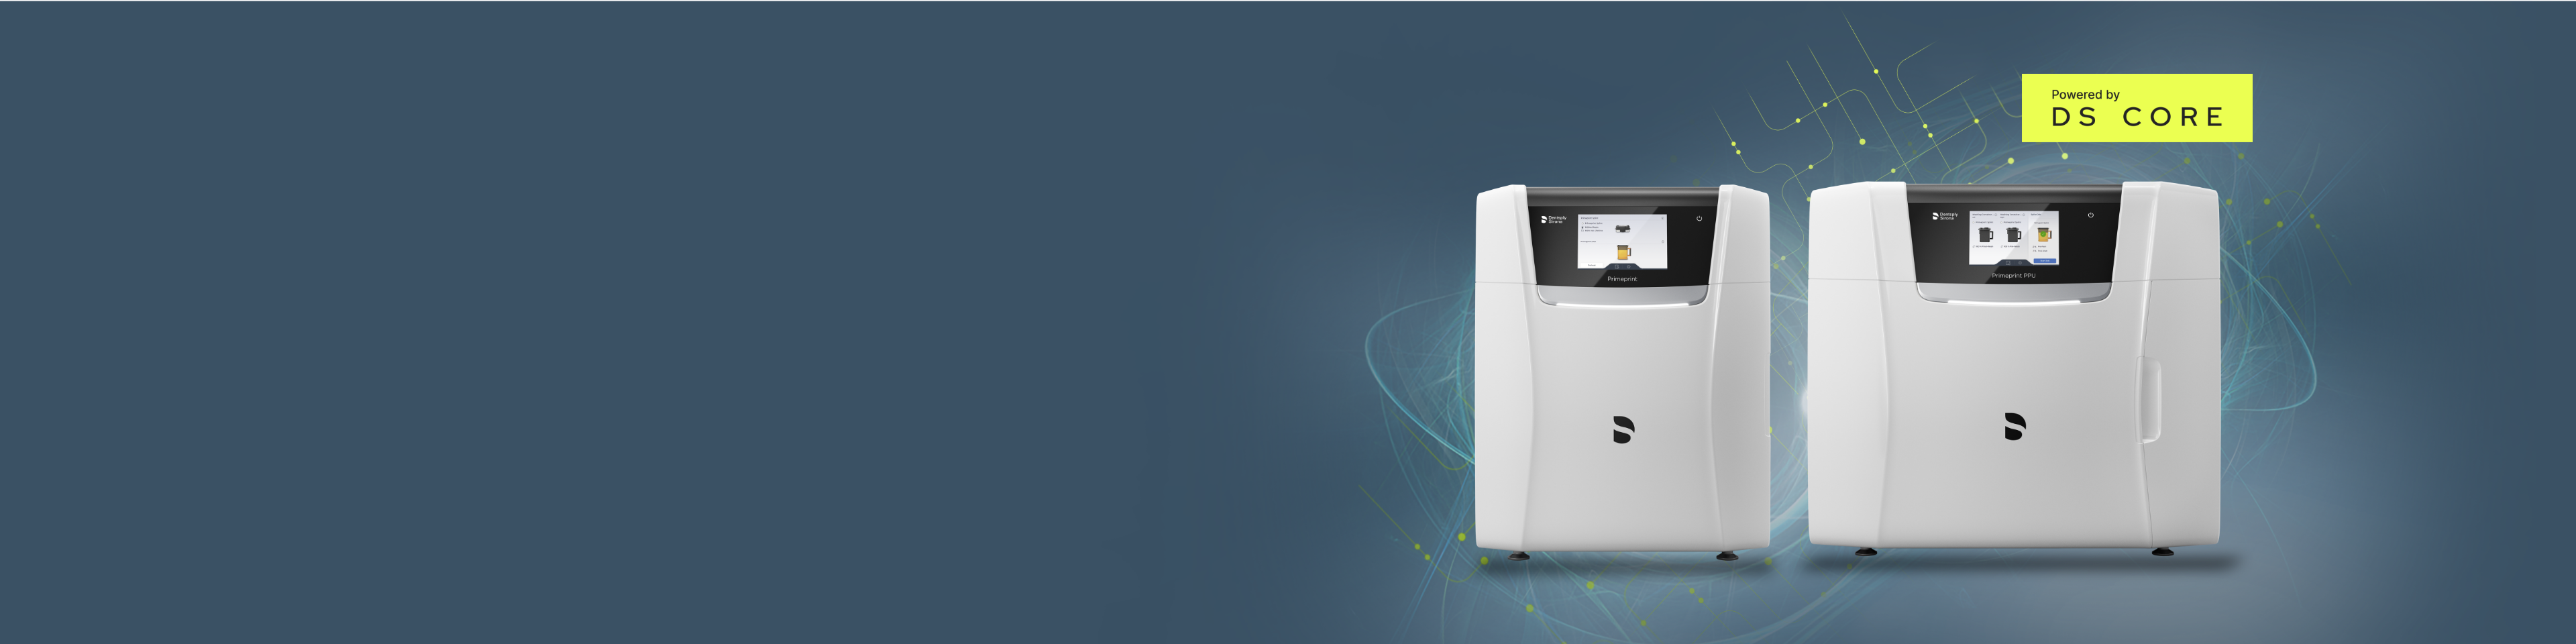 vores gele ventil Primeprint | Dental 3D Printer | Dentsply Sirona USA